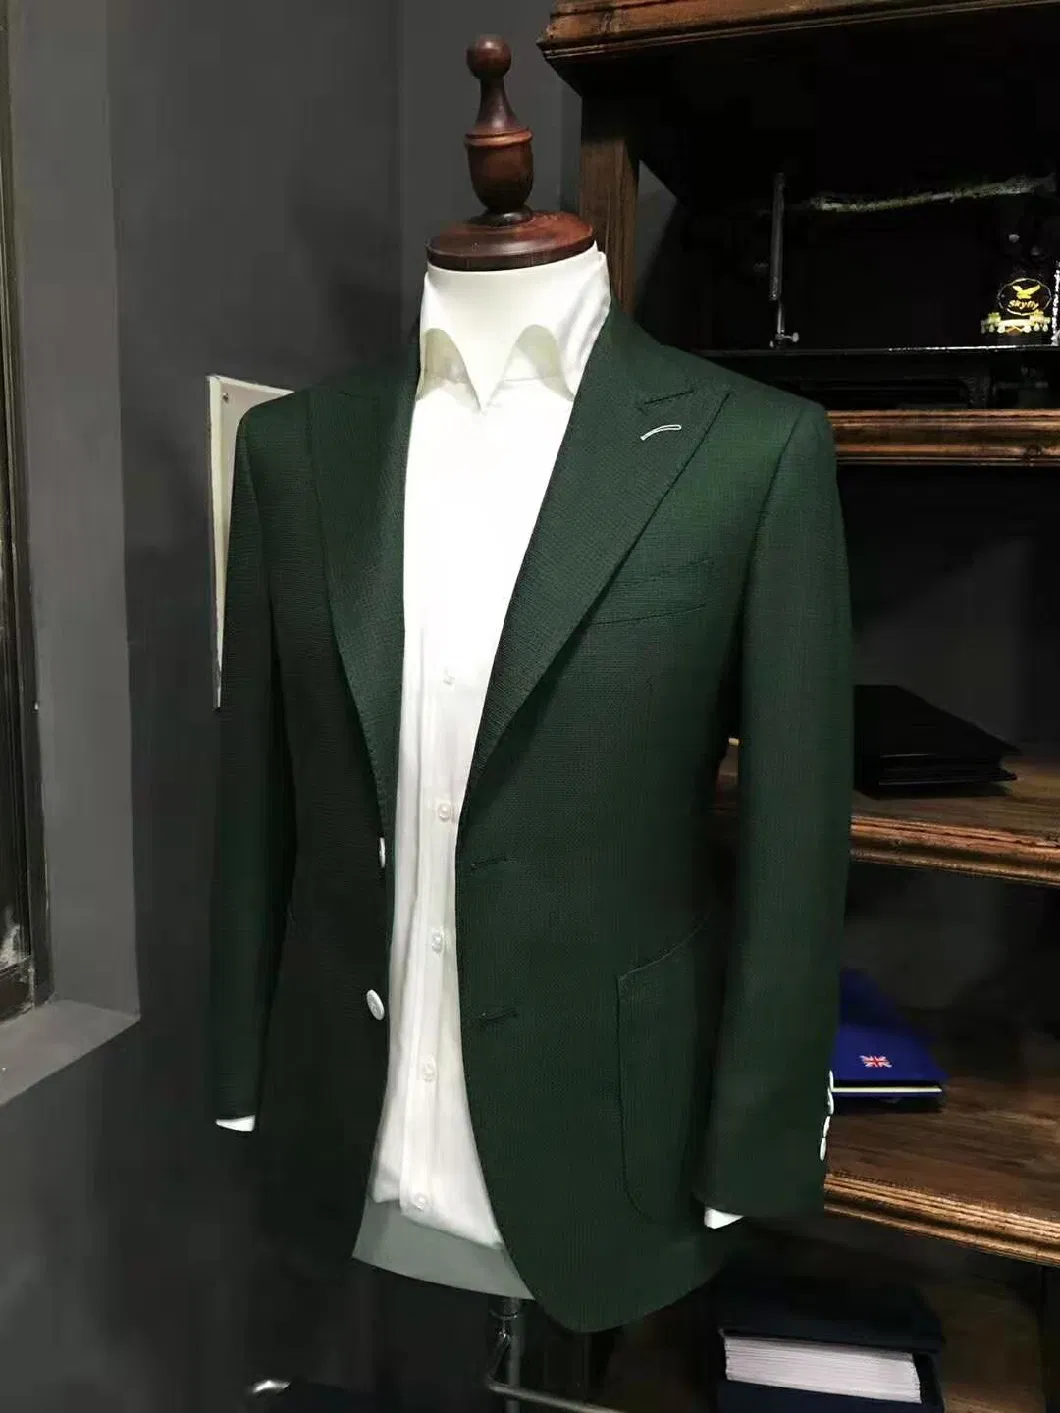 Bespoke Tailor Suit Made-to-Measure Wedding Suit Apparel Bespoke Man Business Men Suit